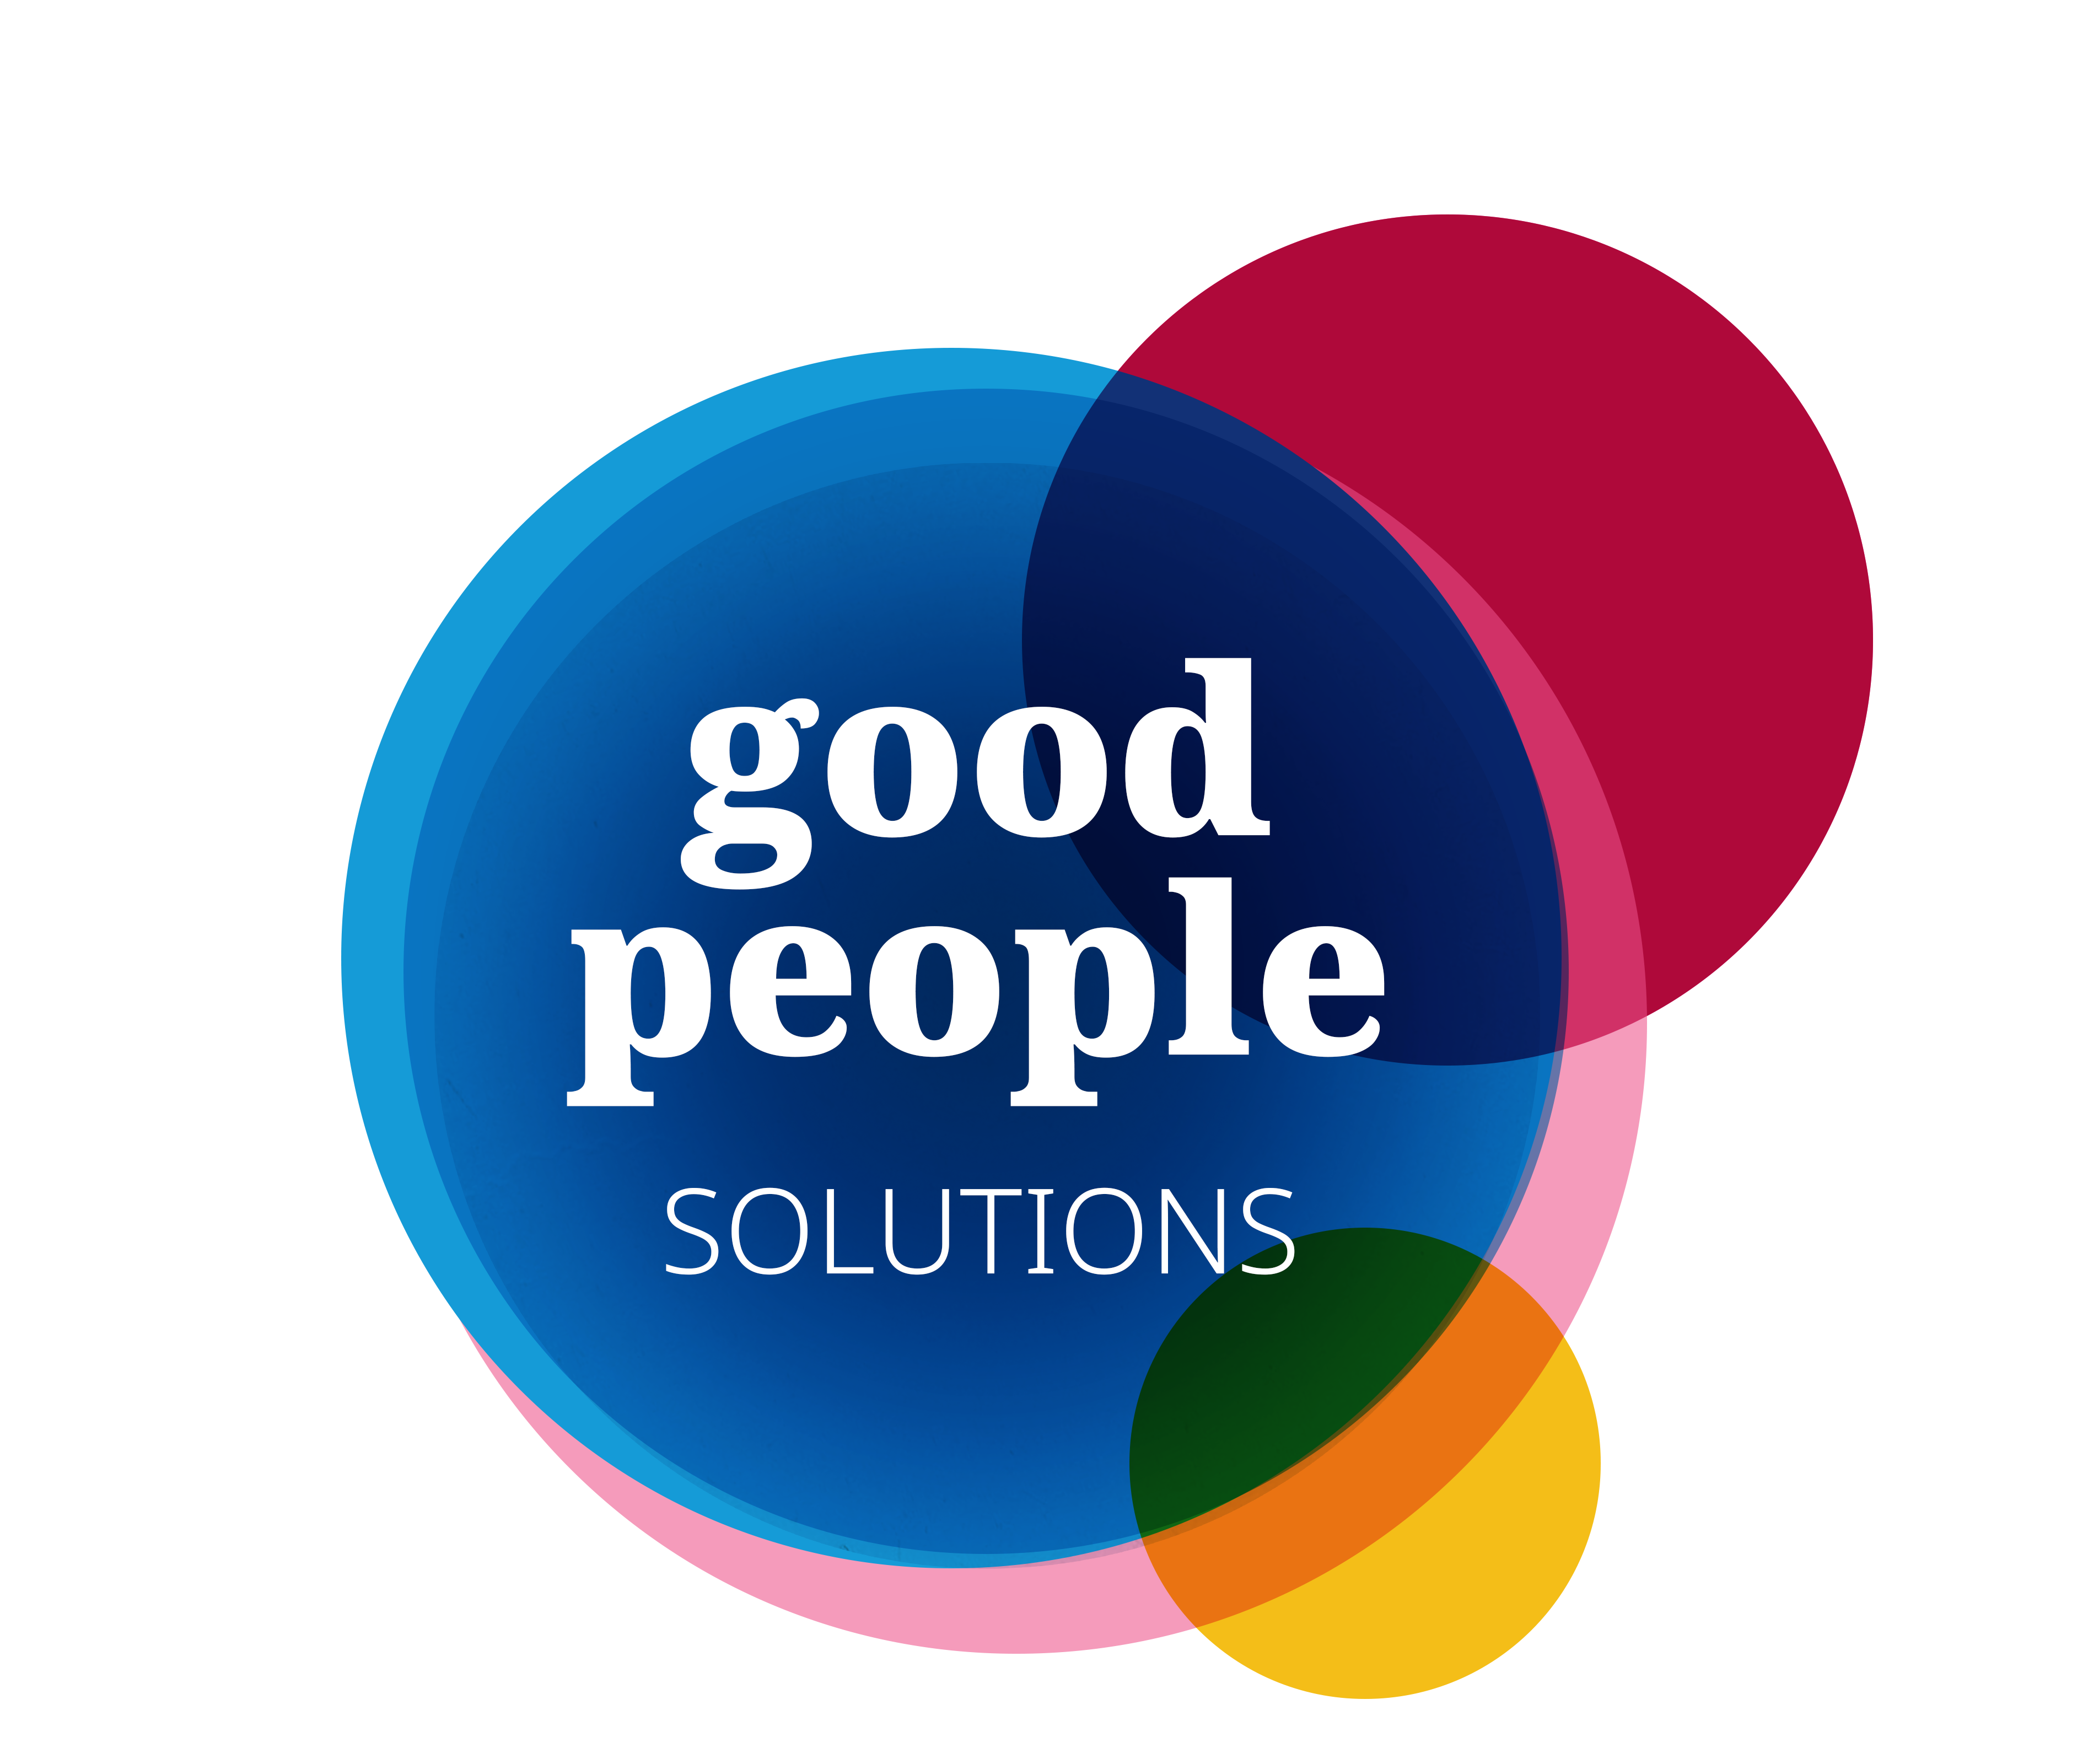 Good people logo